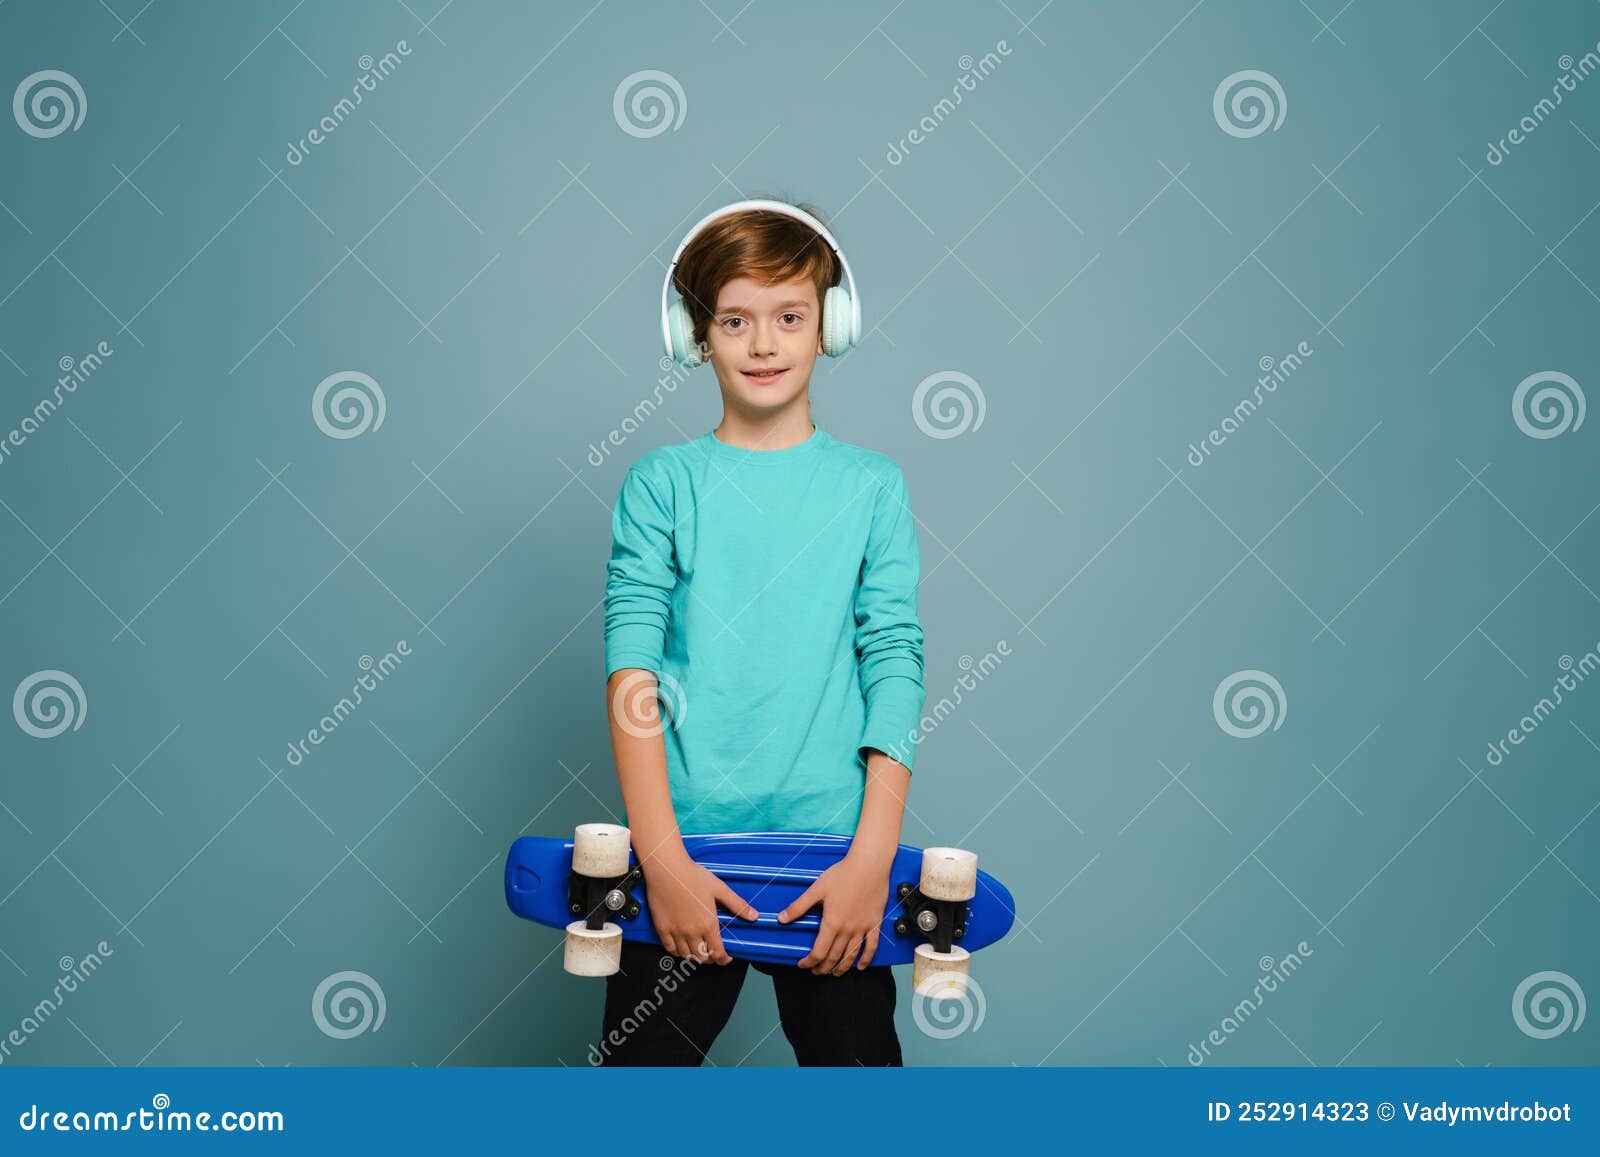 Blue-haired boy wearing headphones - wide 6